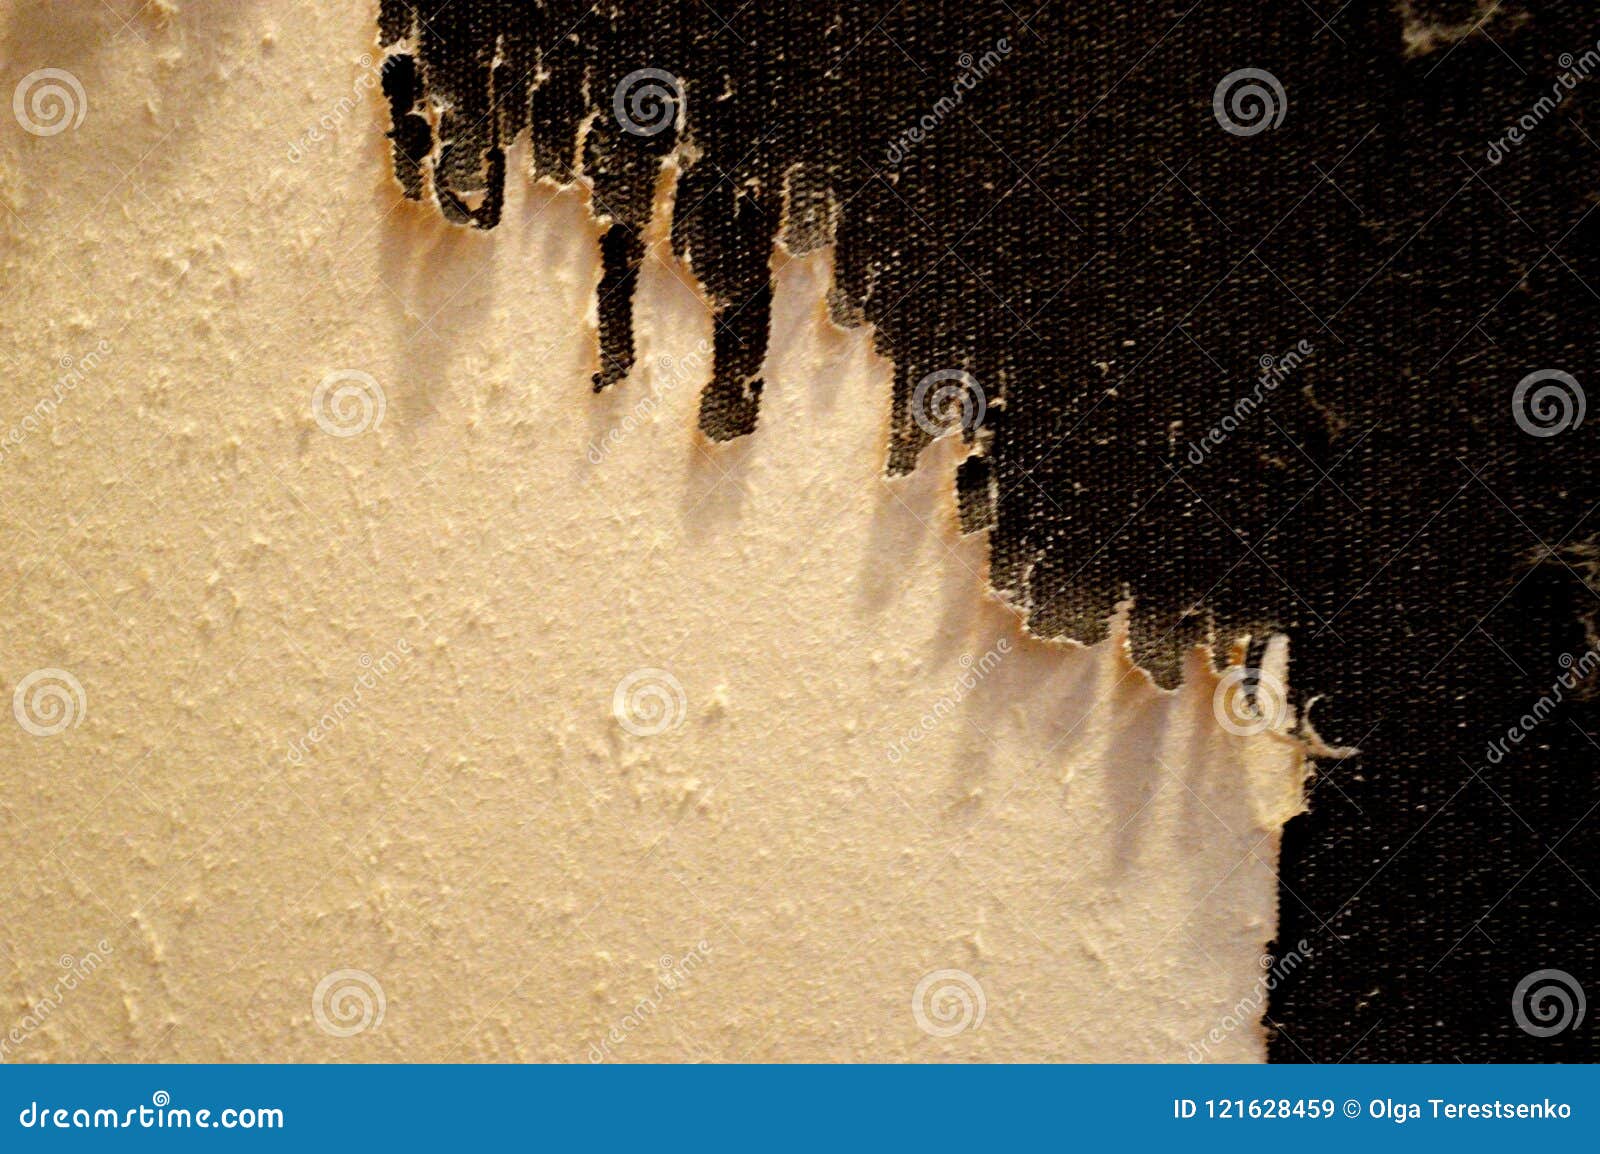 ImageAfter  texture  crack tear wallpaper wall paper karton rip ripped  teared